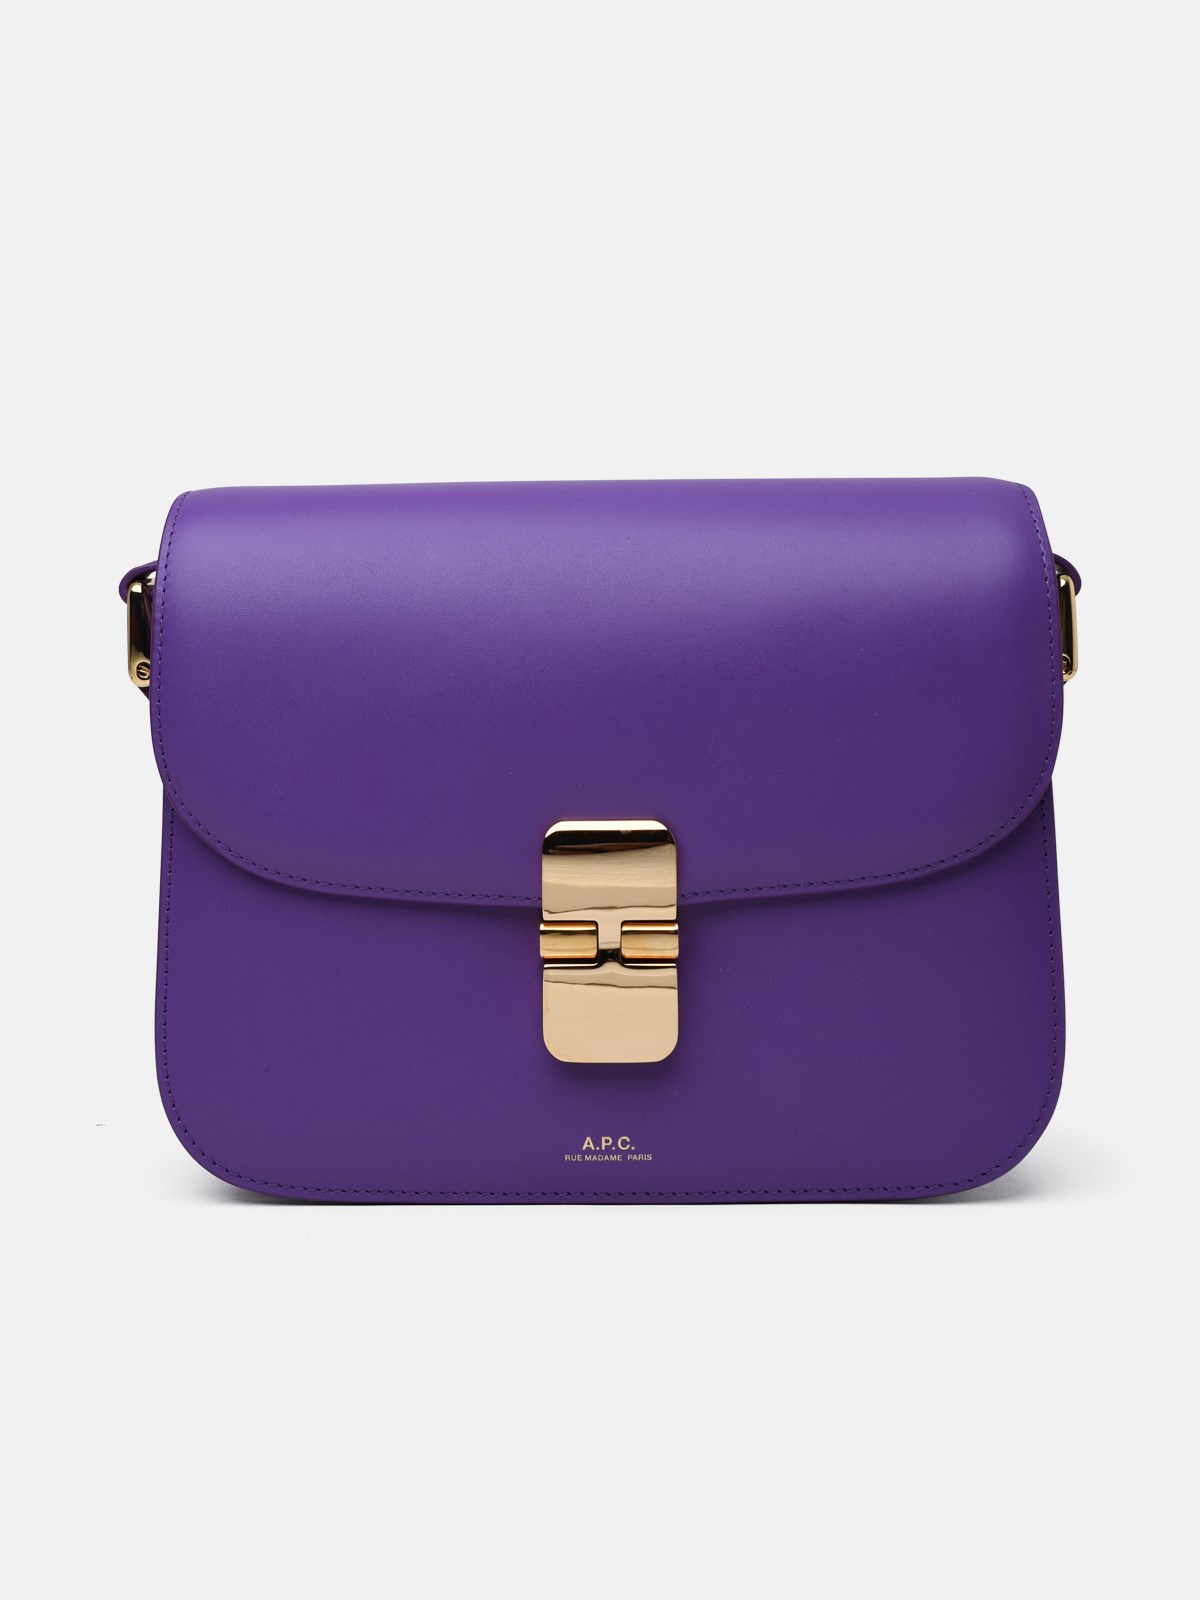 A.p.c. Grace Purple Leather Crossbody Bag In Violet